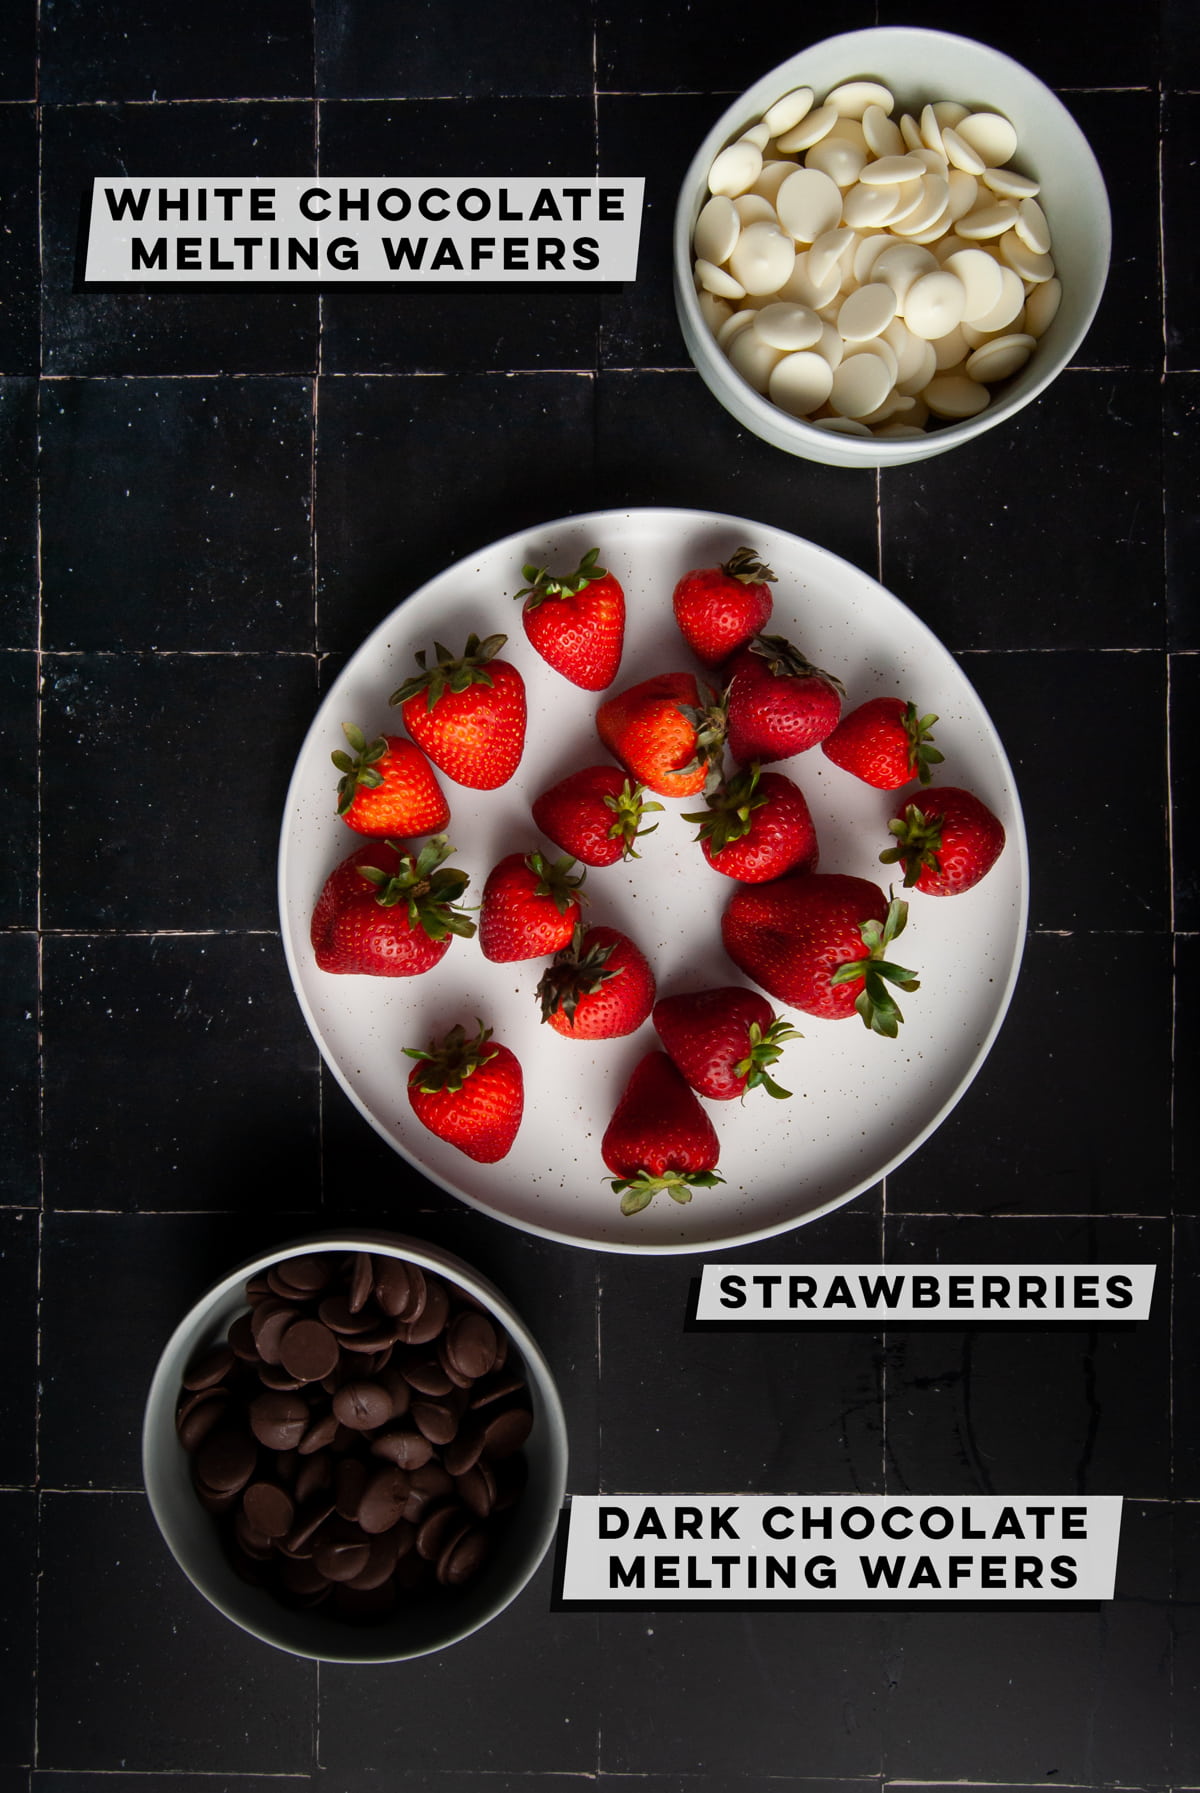 white chocolate melting wafers, strawberries, and dark chocolate melting wafers